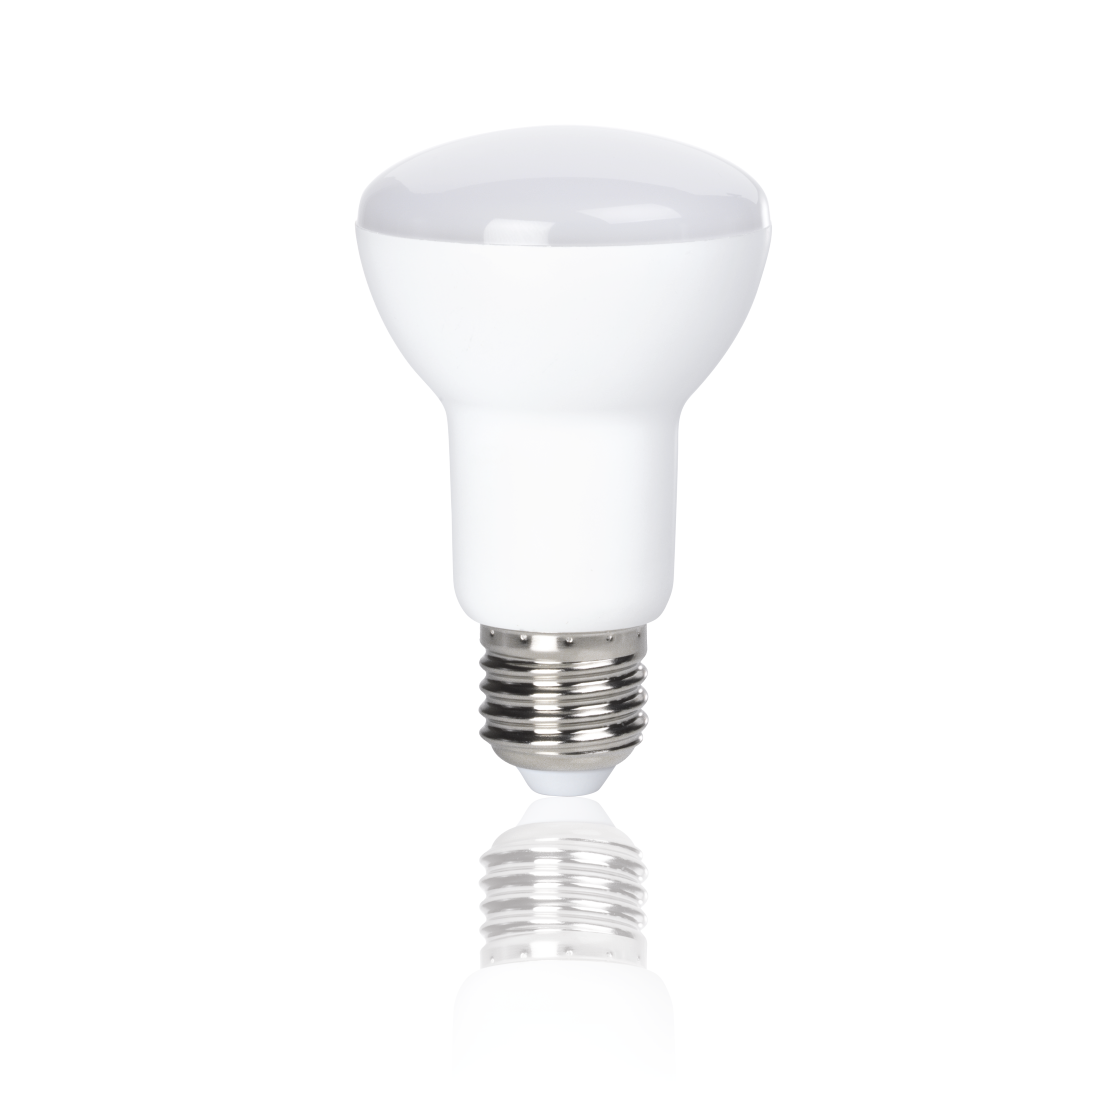 abx2 Druckfähige Abbildung 2 - Xavax, LED-Lampe, E27, 630lm ersetzt 60W, Reflektorlampe R63, Warmweiß